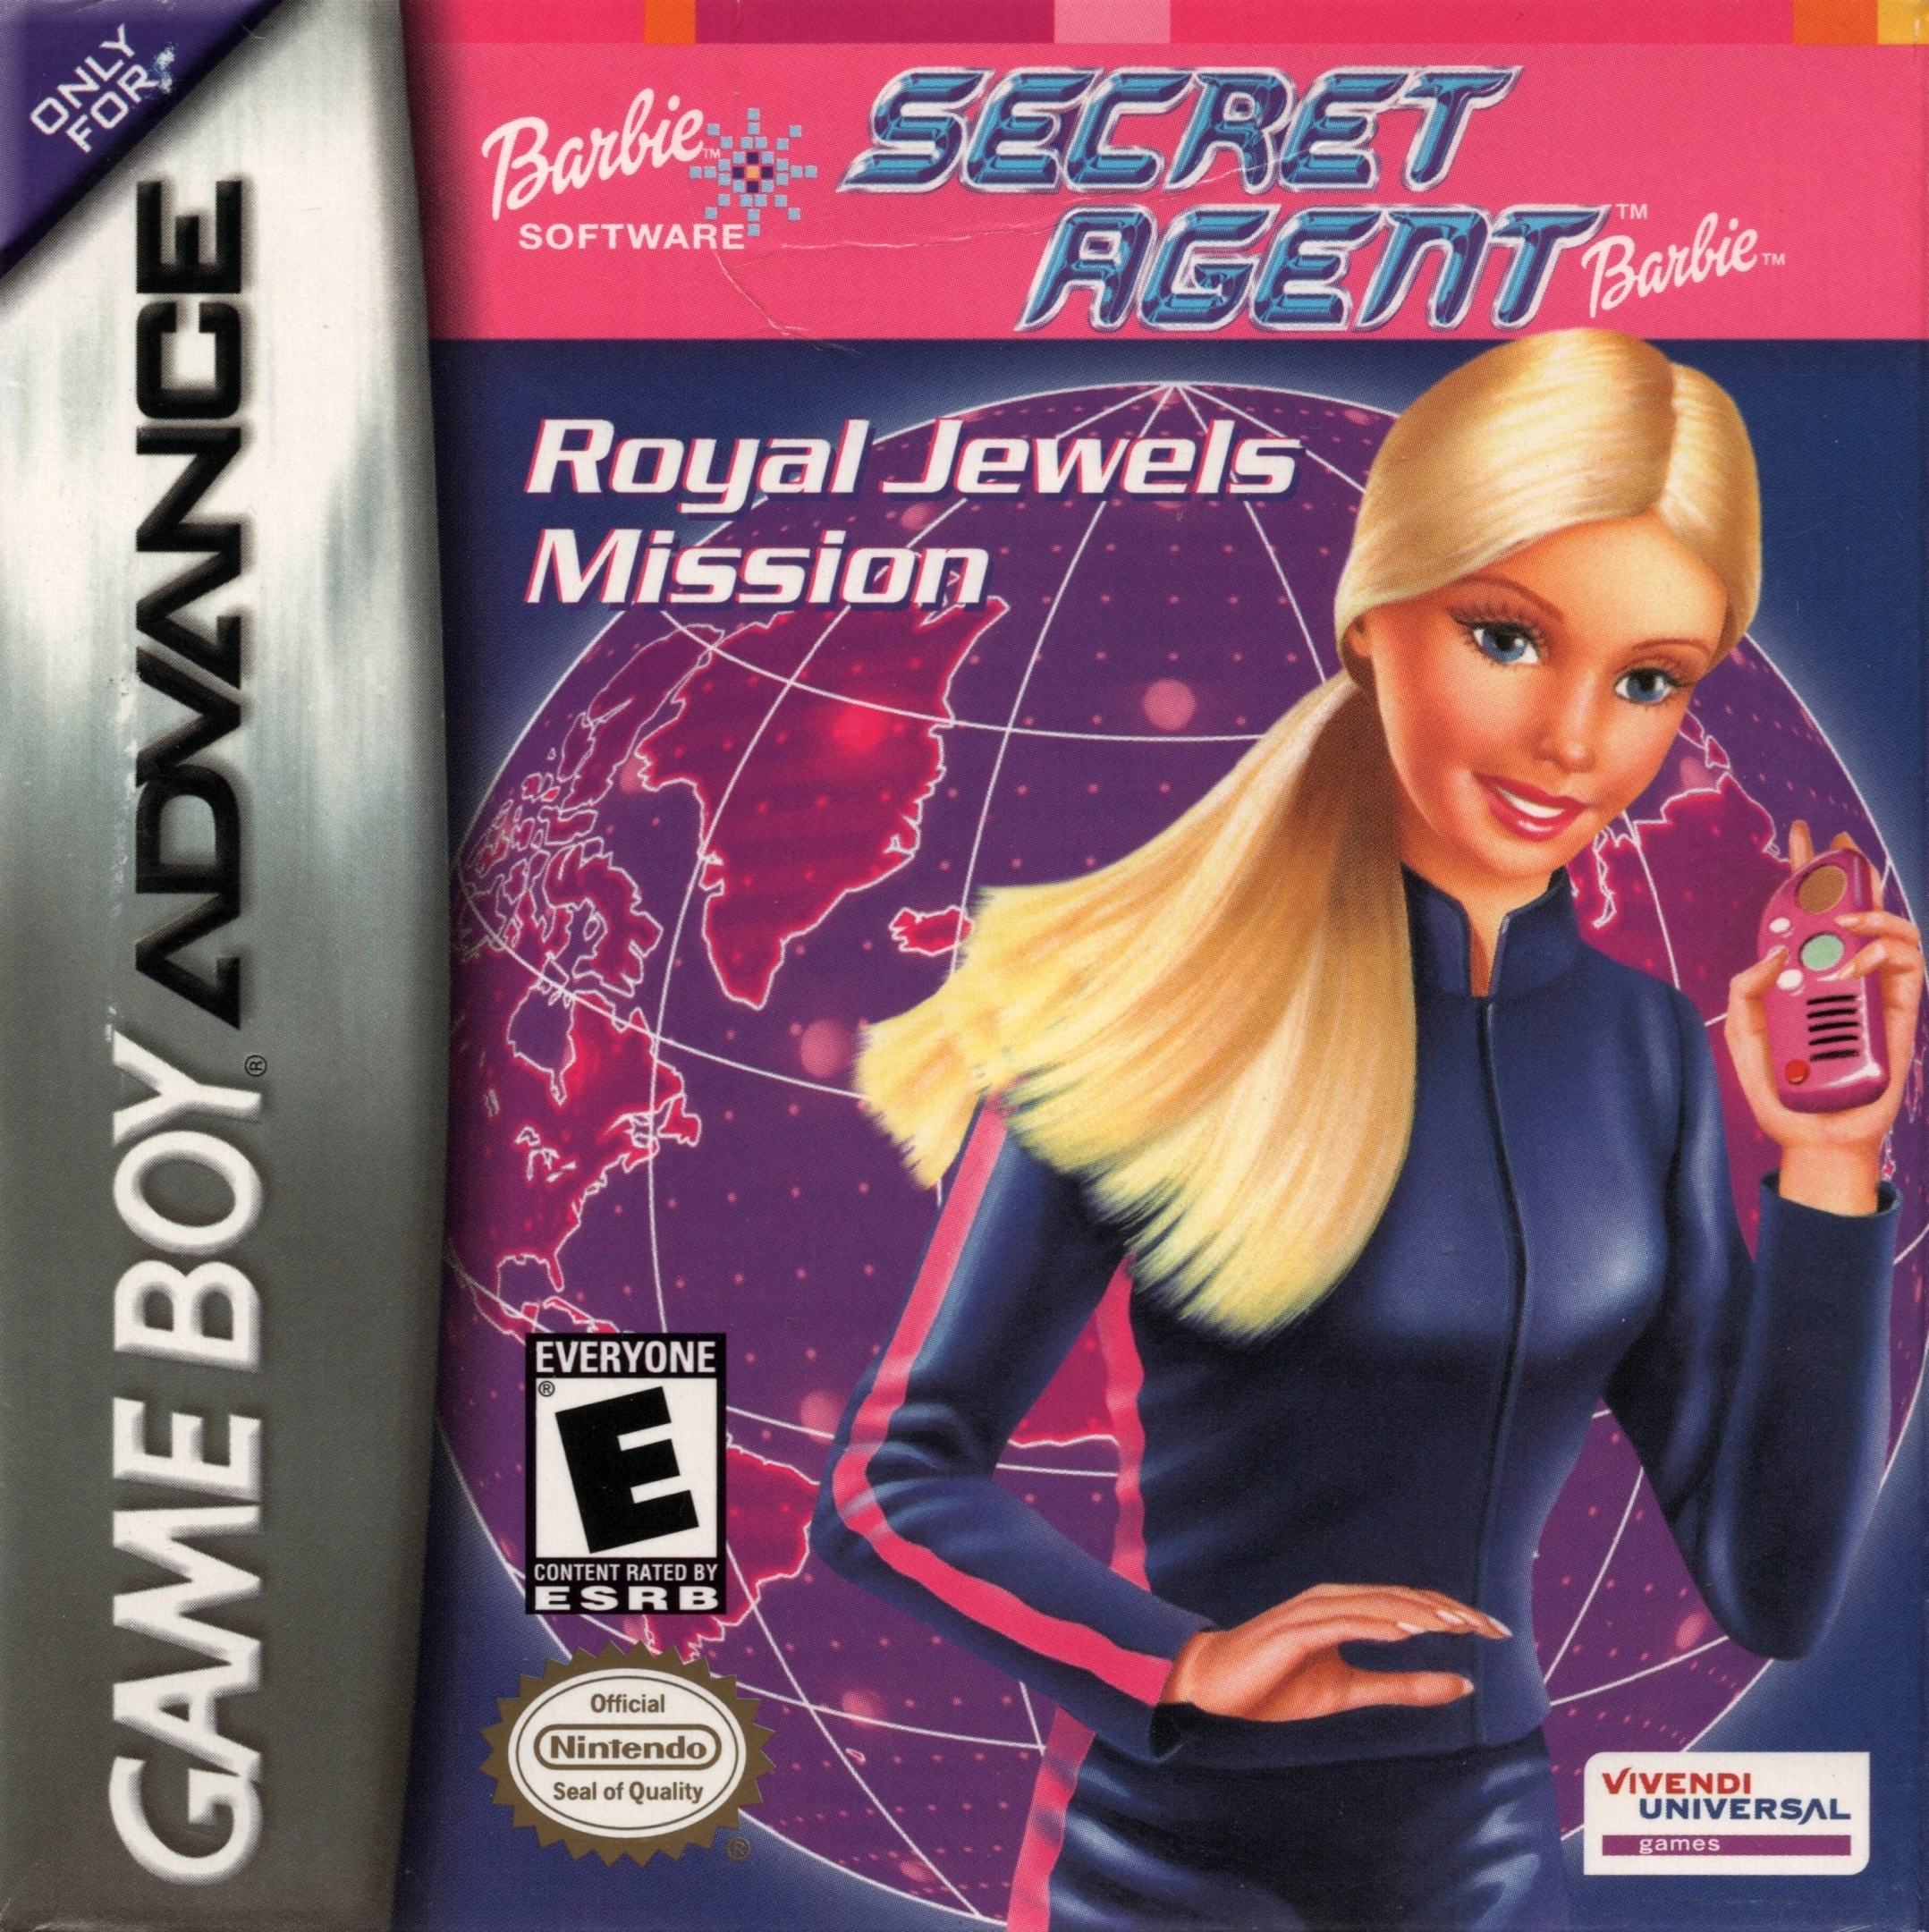 Барби шпион игра. Барби секретный агент игра. Secret agent Barbie: Royal Jewels Mission. Барби тайный агент игра. Барби секретный агент игра диск.